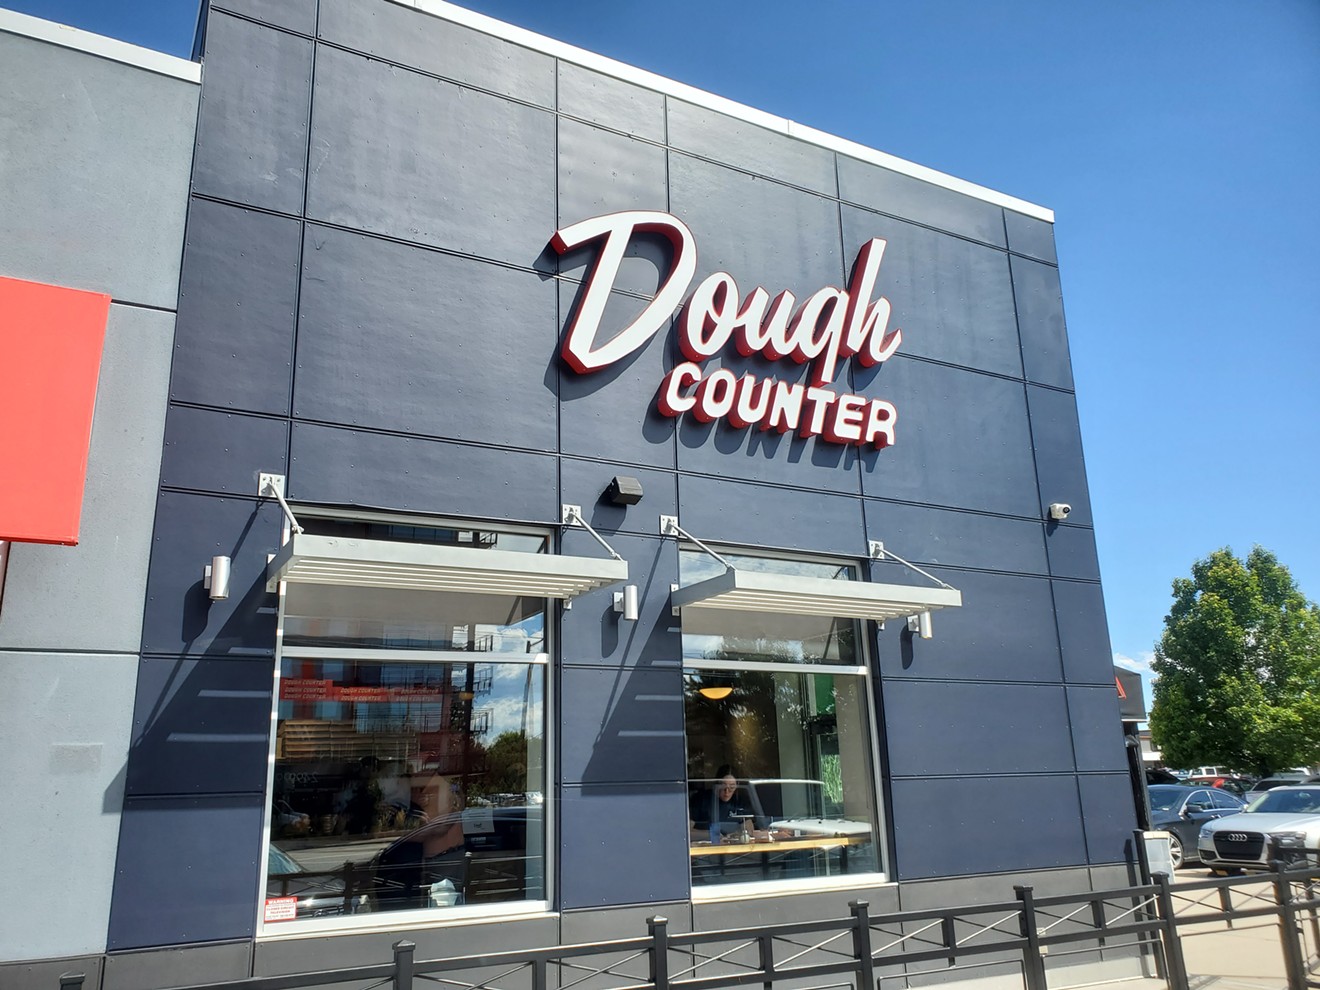 Dough Counter opened on September 5.